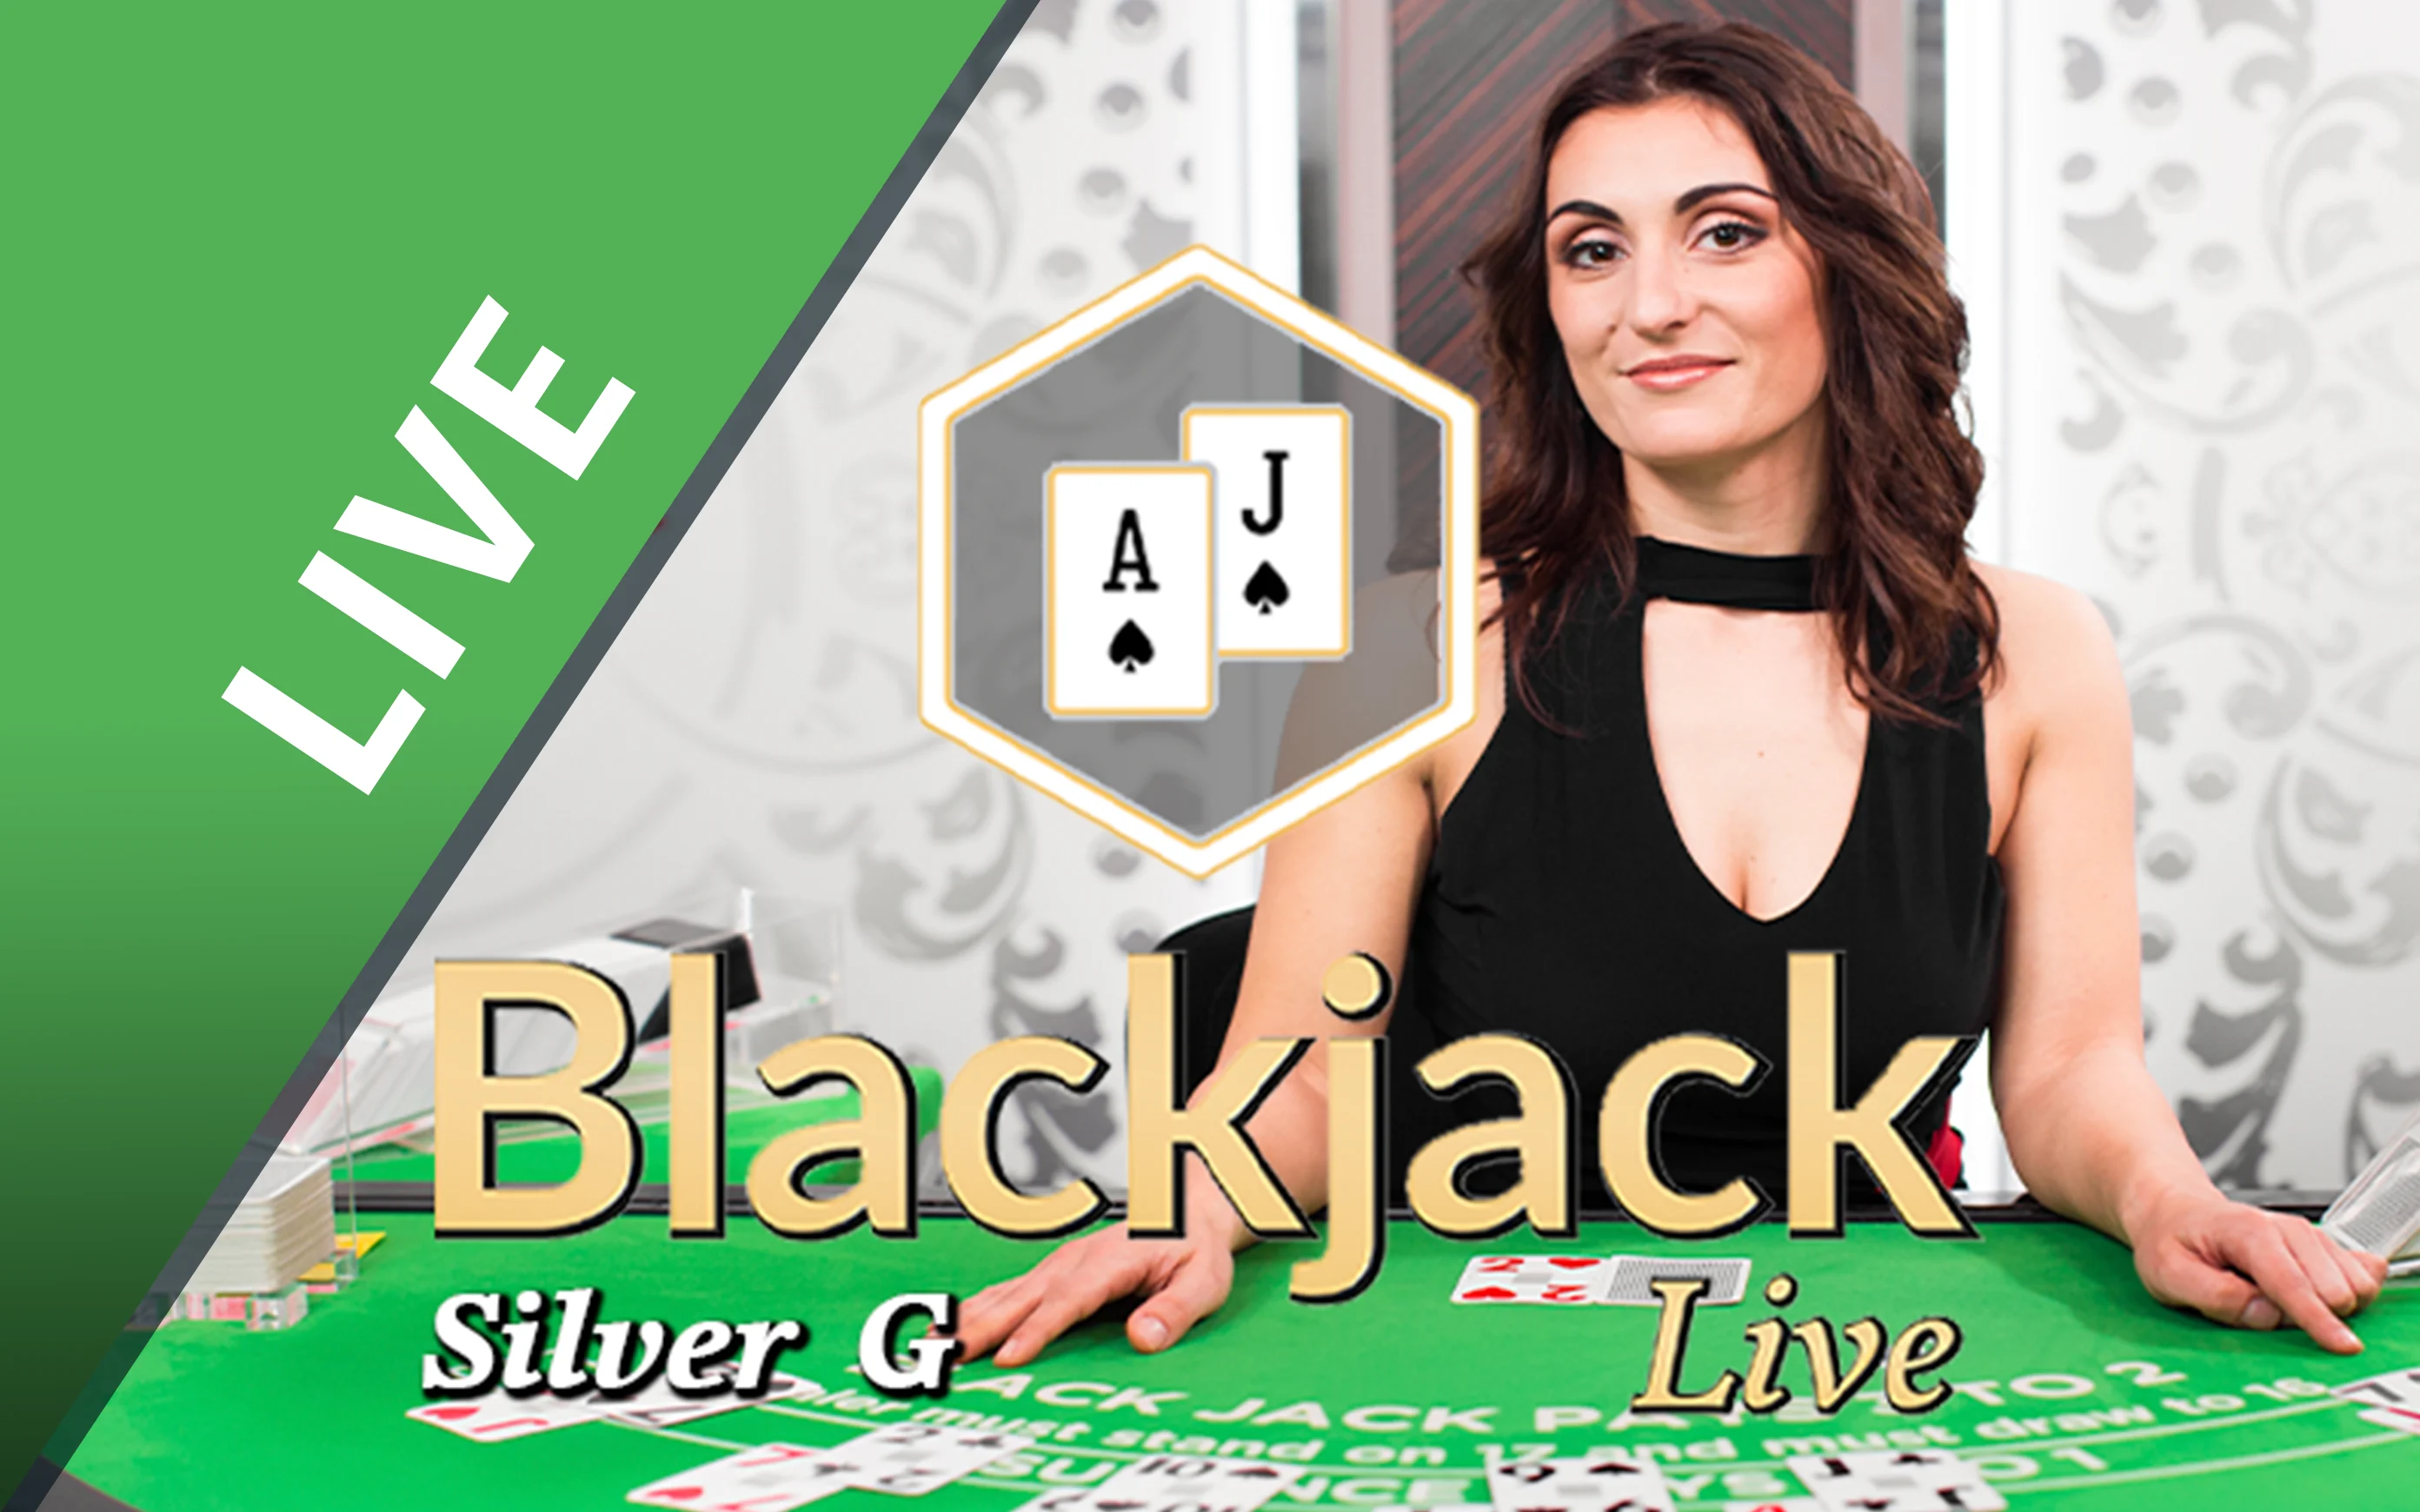 Play Blackjack Silver G on Starcasino.be online casino